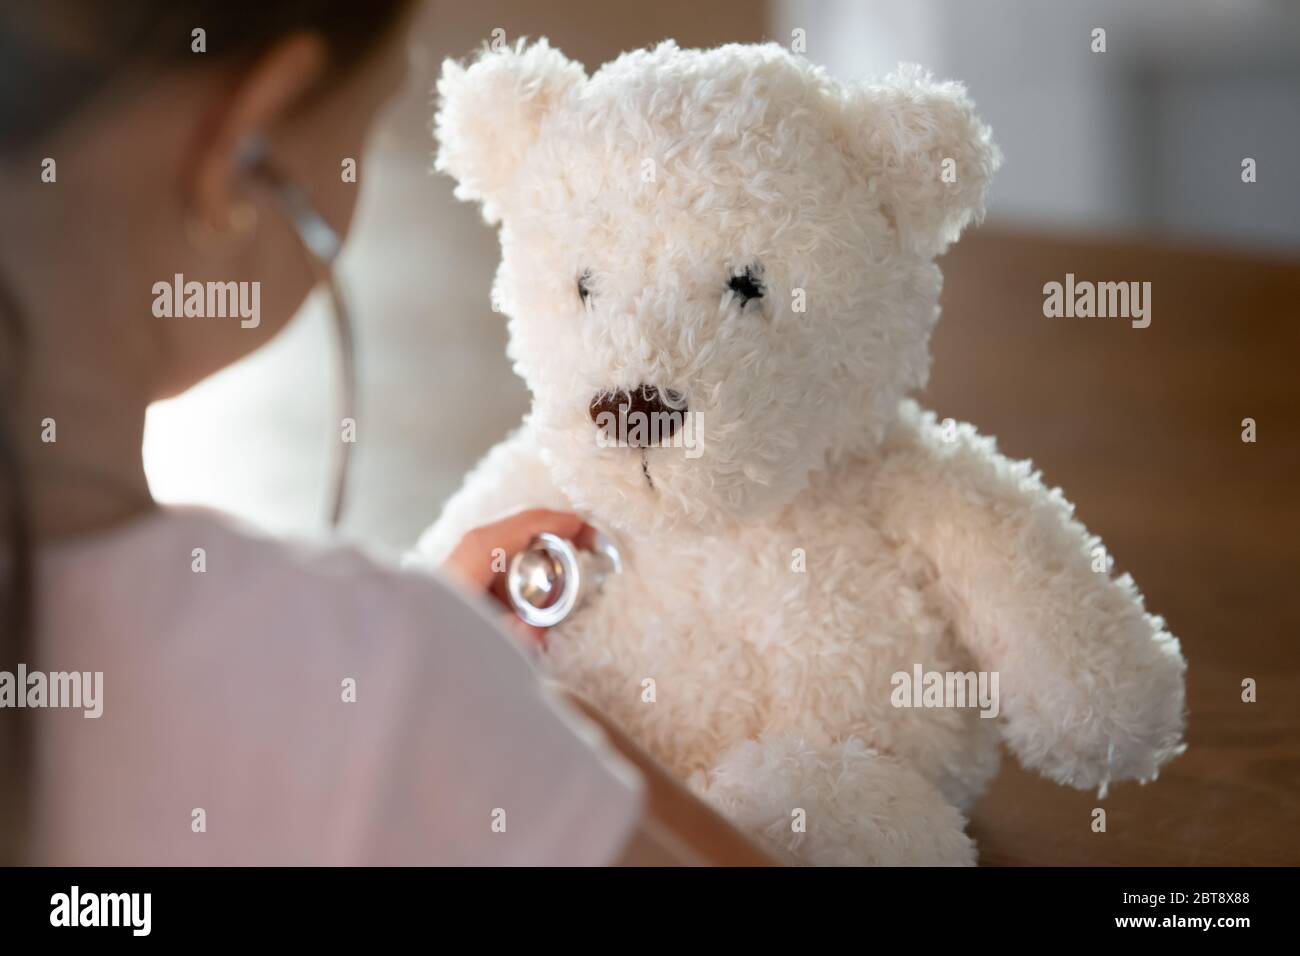 Caring little kid examine plush teddy bear Stock Photo